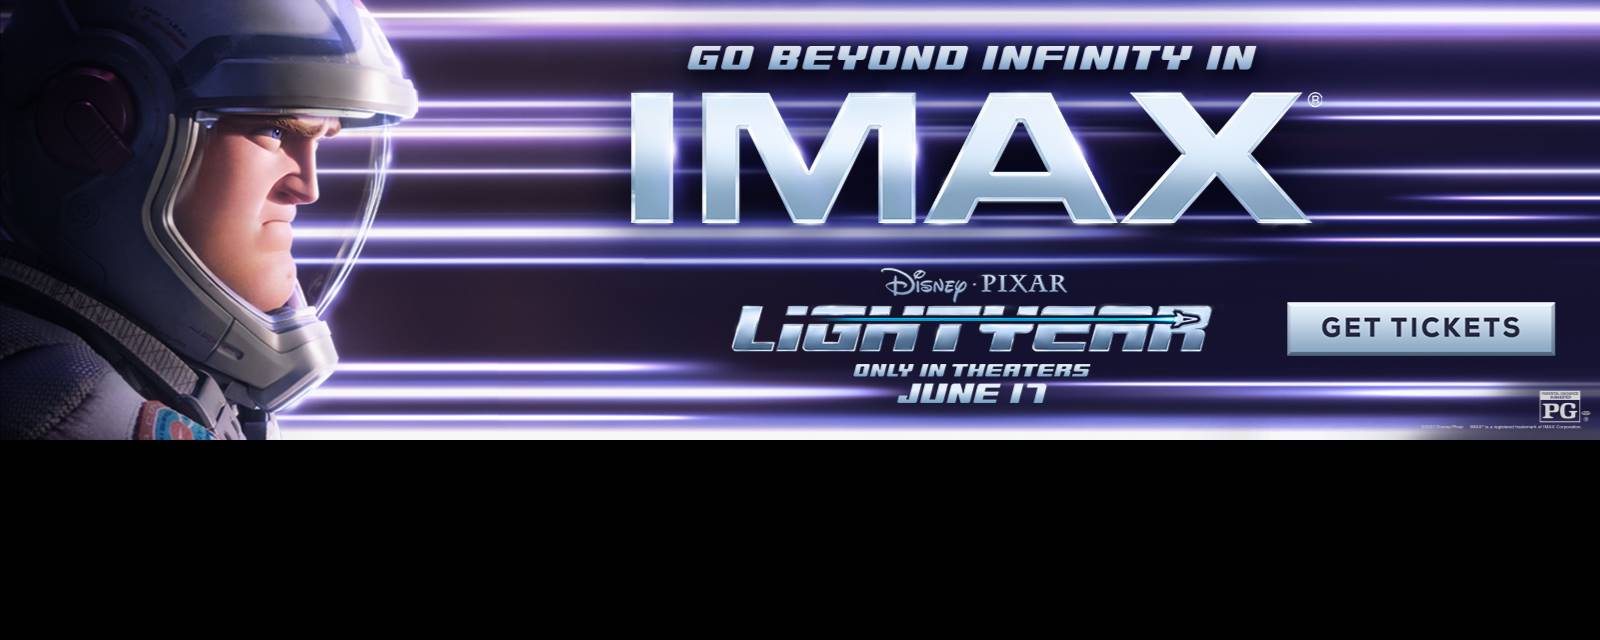 Lightyear in IMAX